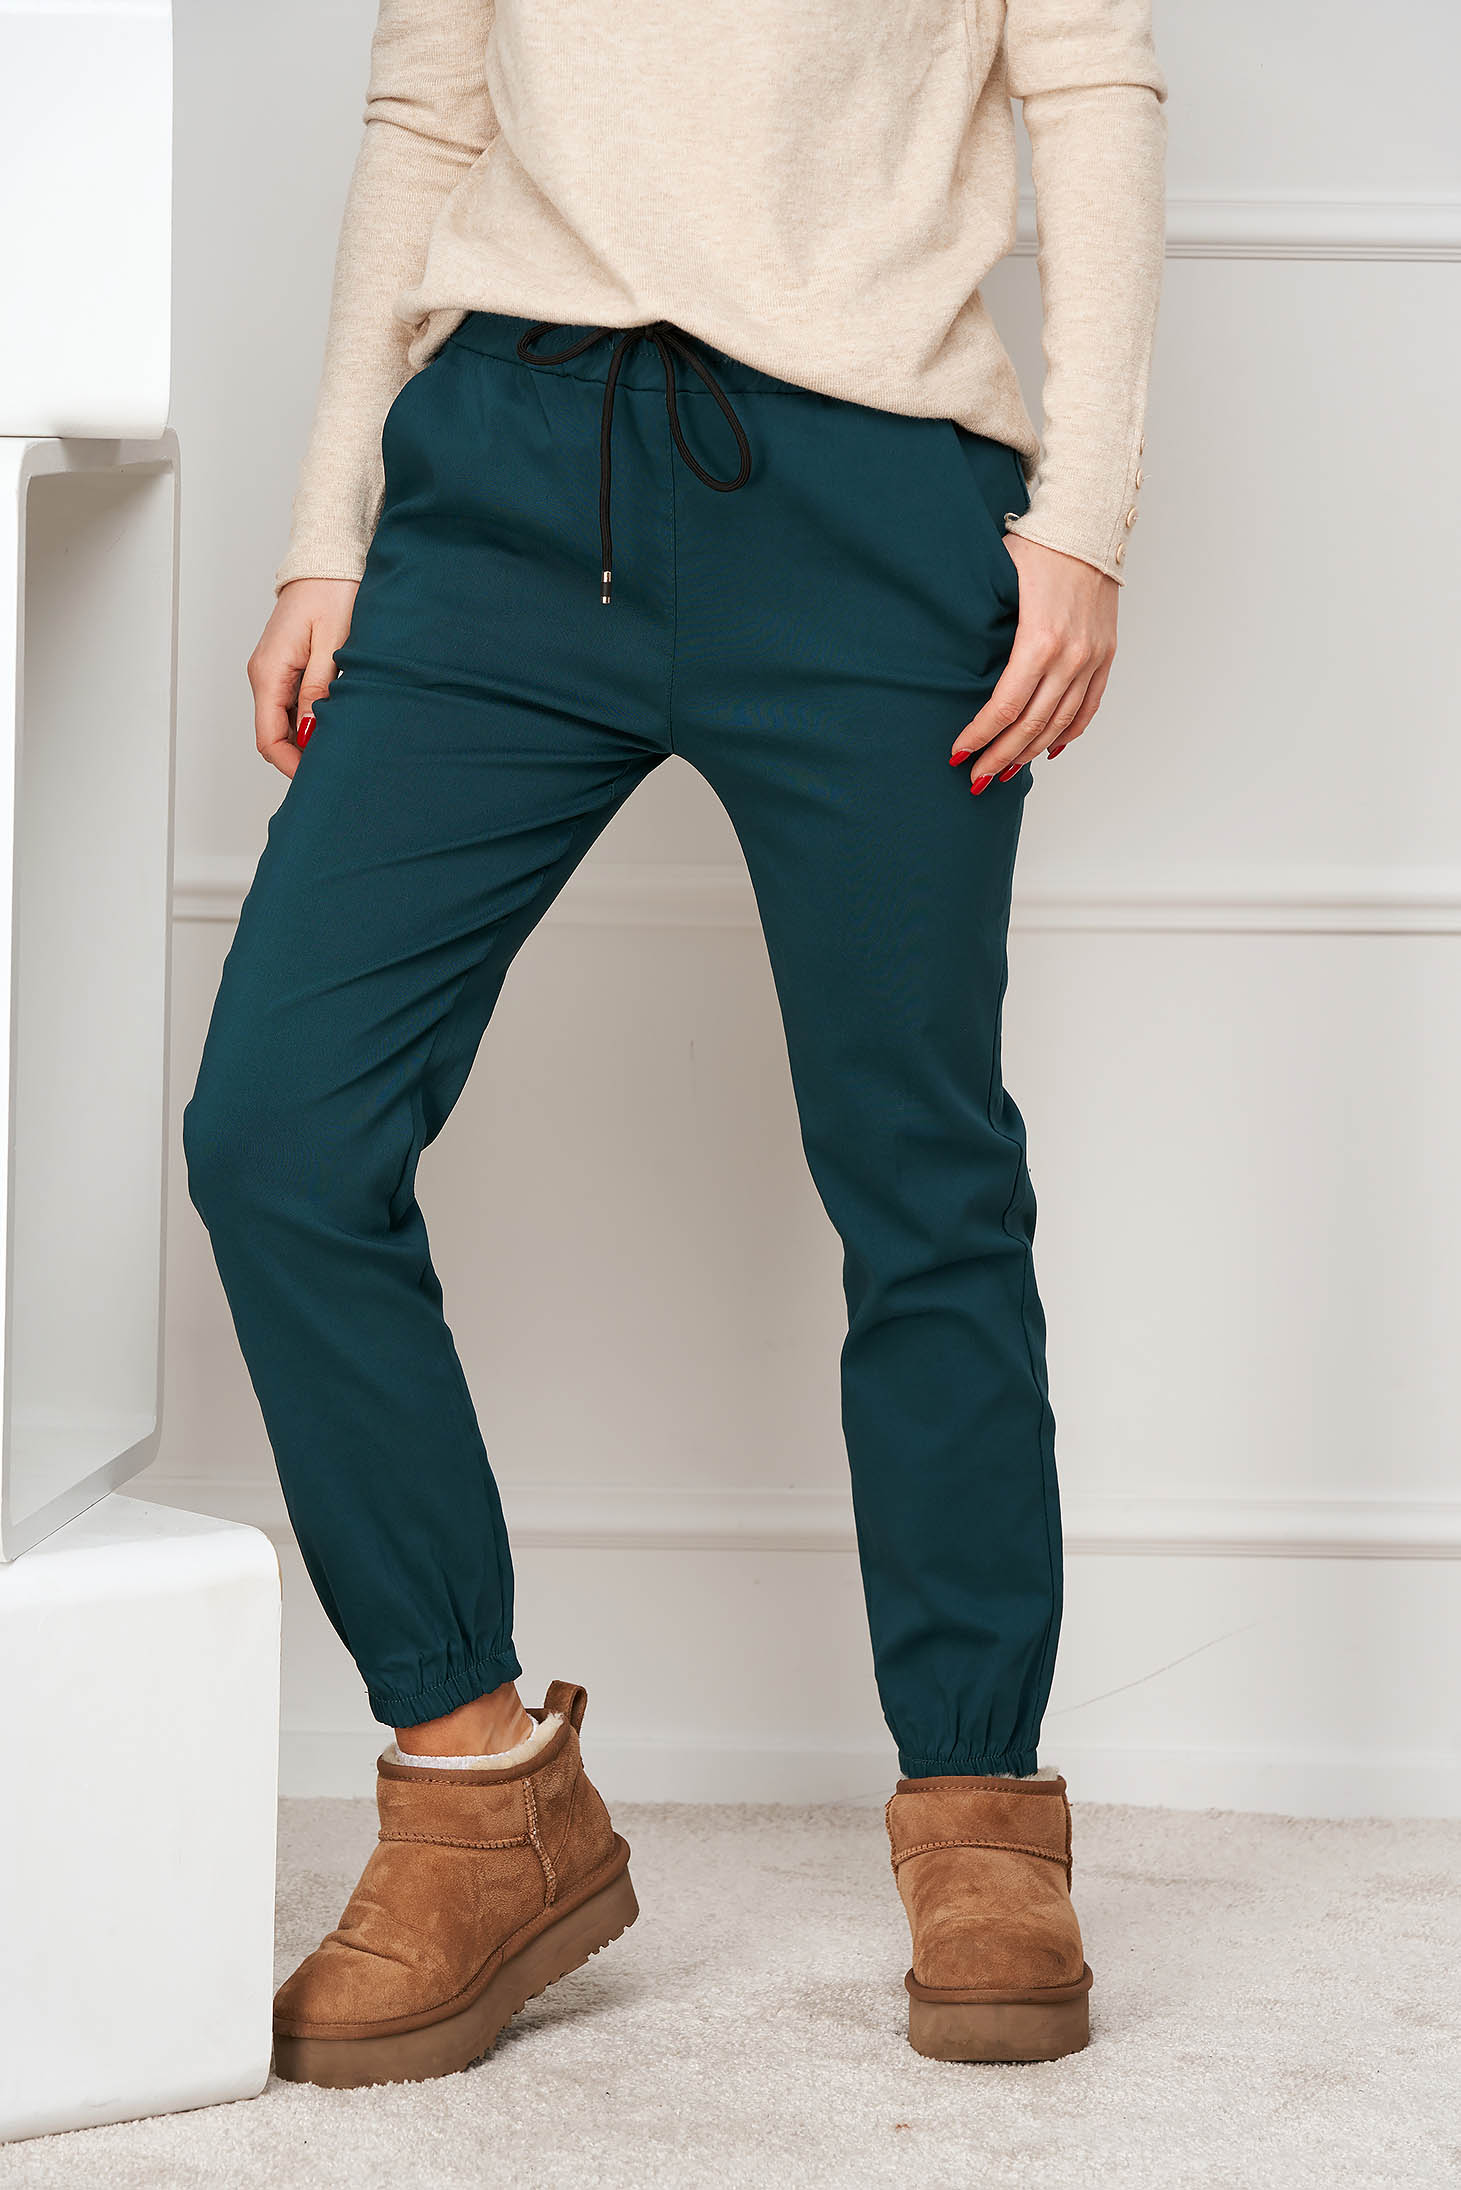 Pantaloni din strech verde petrol lungi cu elastic in talie si snur - SunShine 2 - StarShinerS.ro